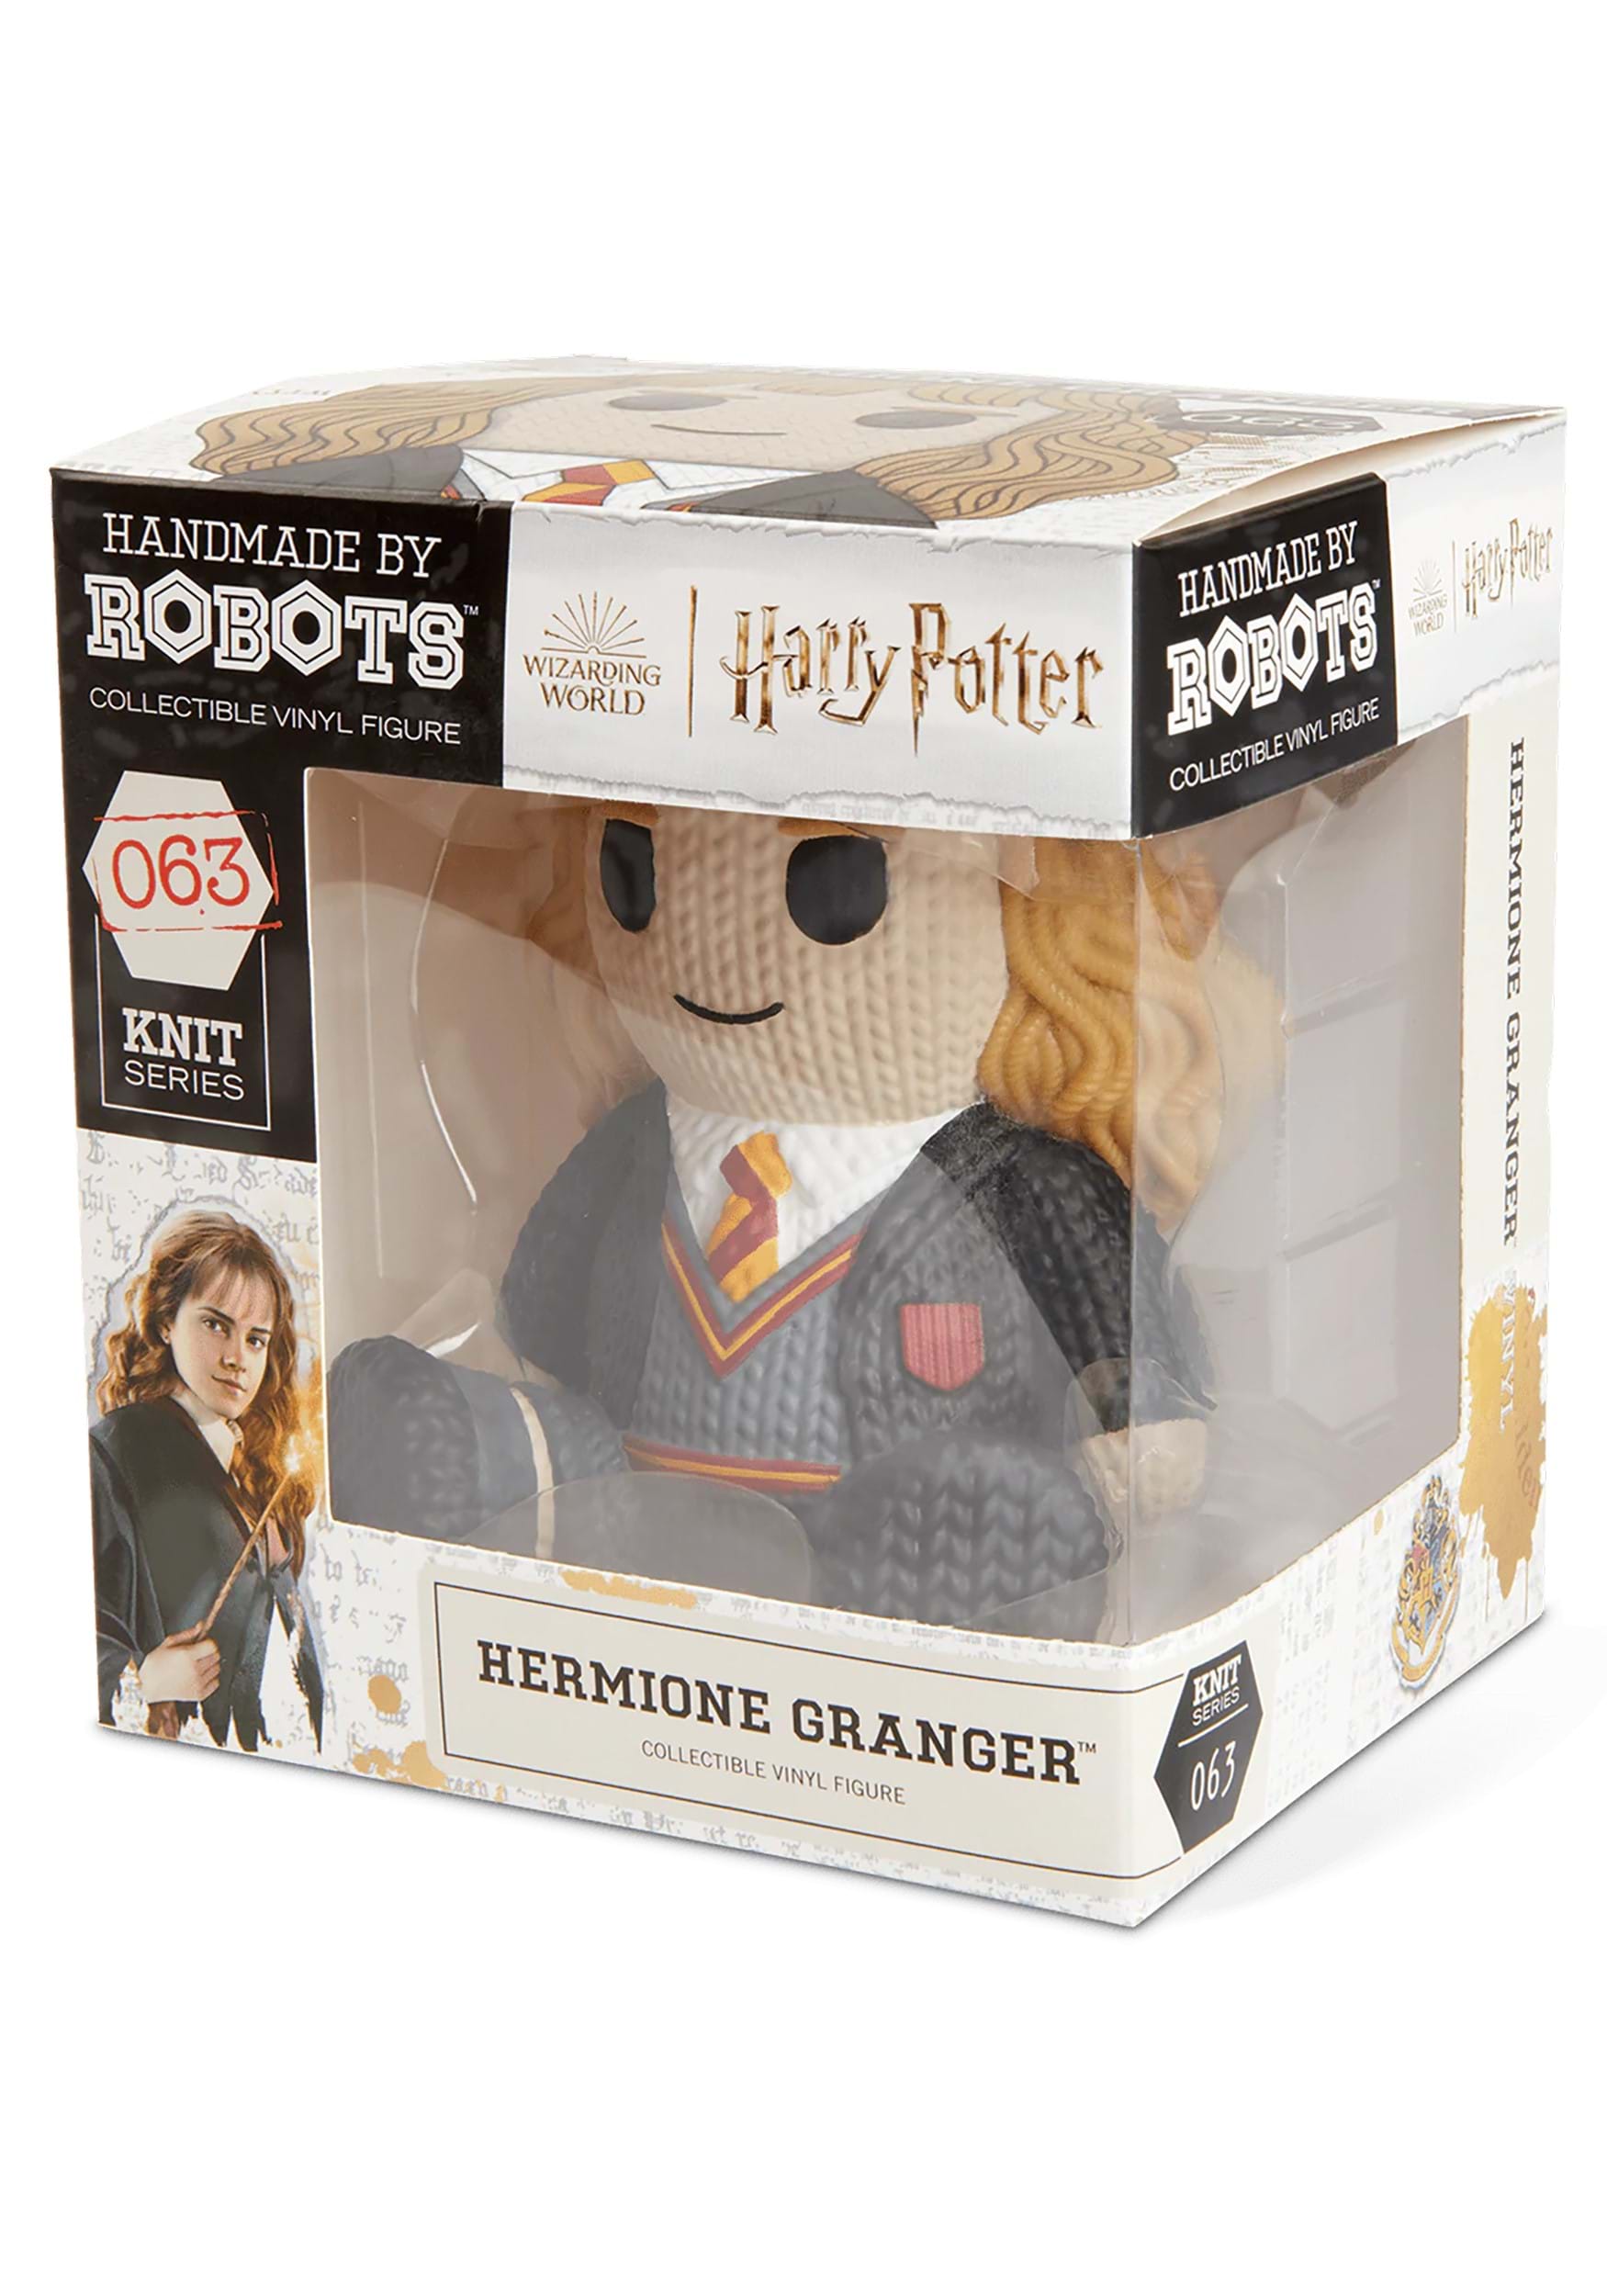 Handmade By Robots Wizarding World Hermione Granger Figure